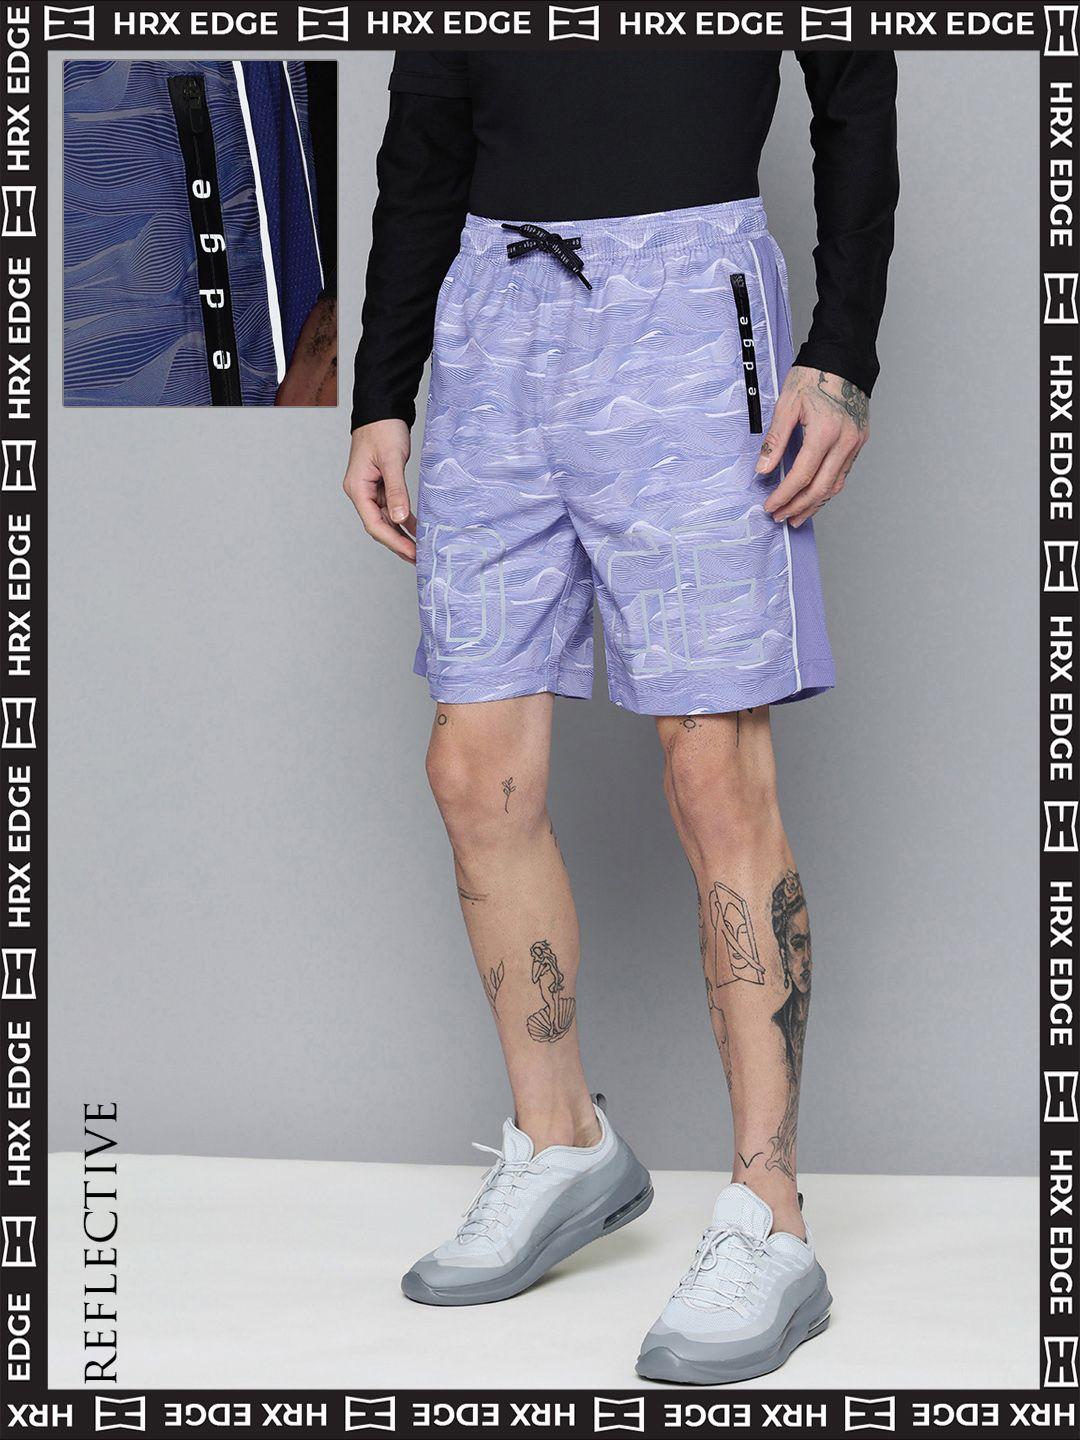 hrx by hrithik roshan edge men lavender rapid-dry printed shorts